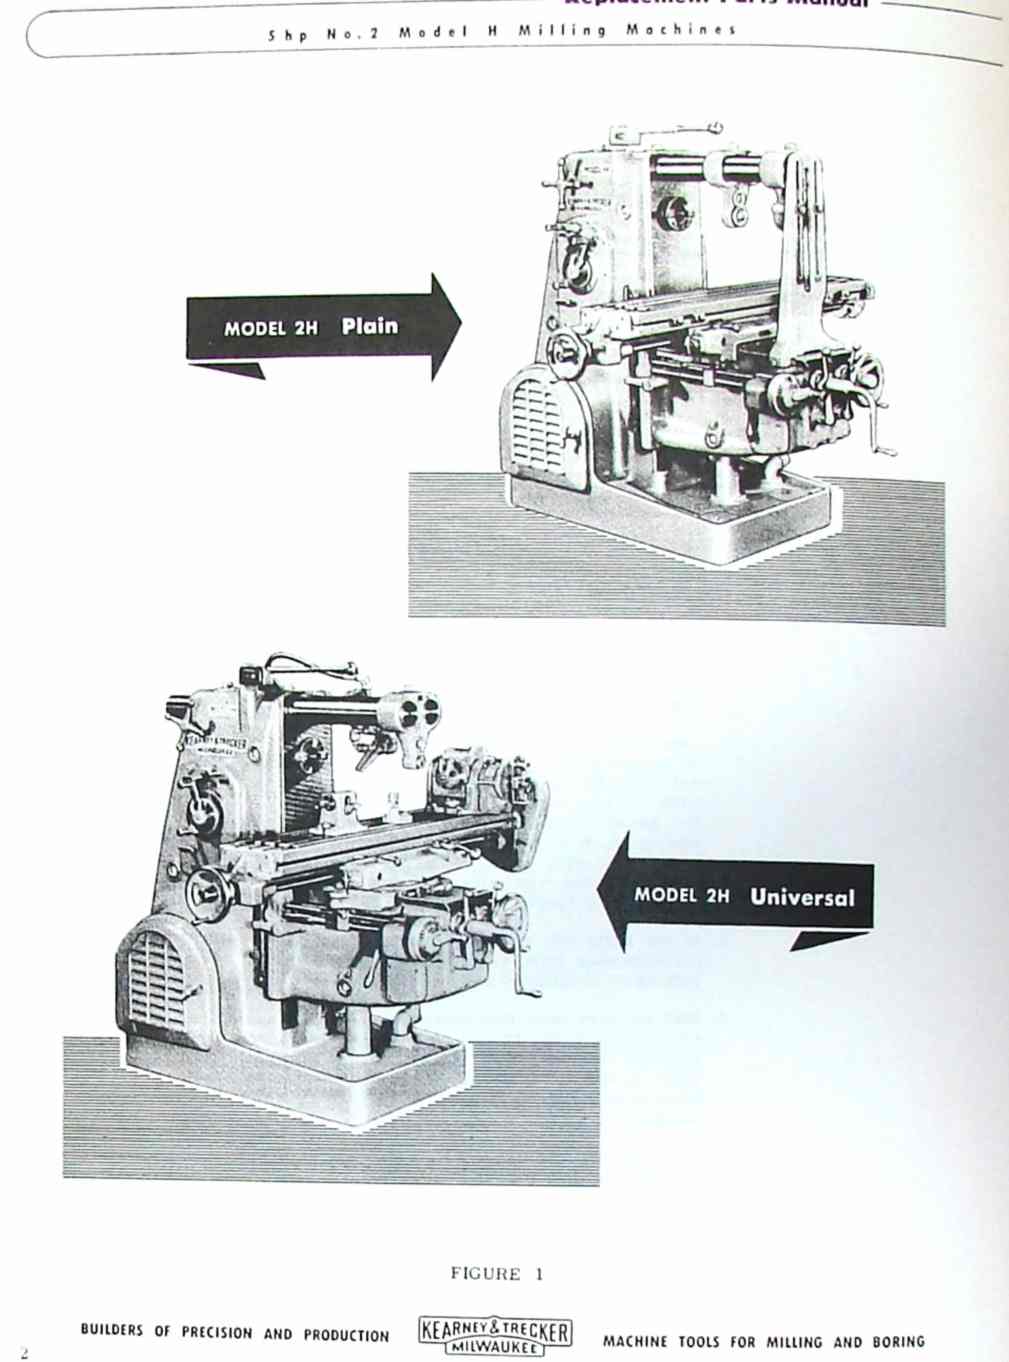 KEARNEY & TRECKER Milwaukee 2H Milling Machines Operator's Manual 0892 